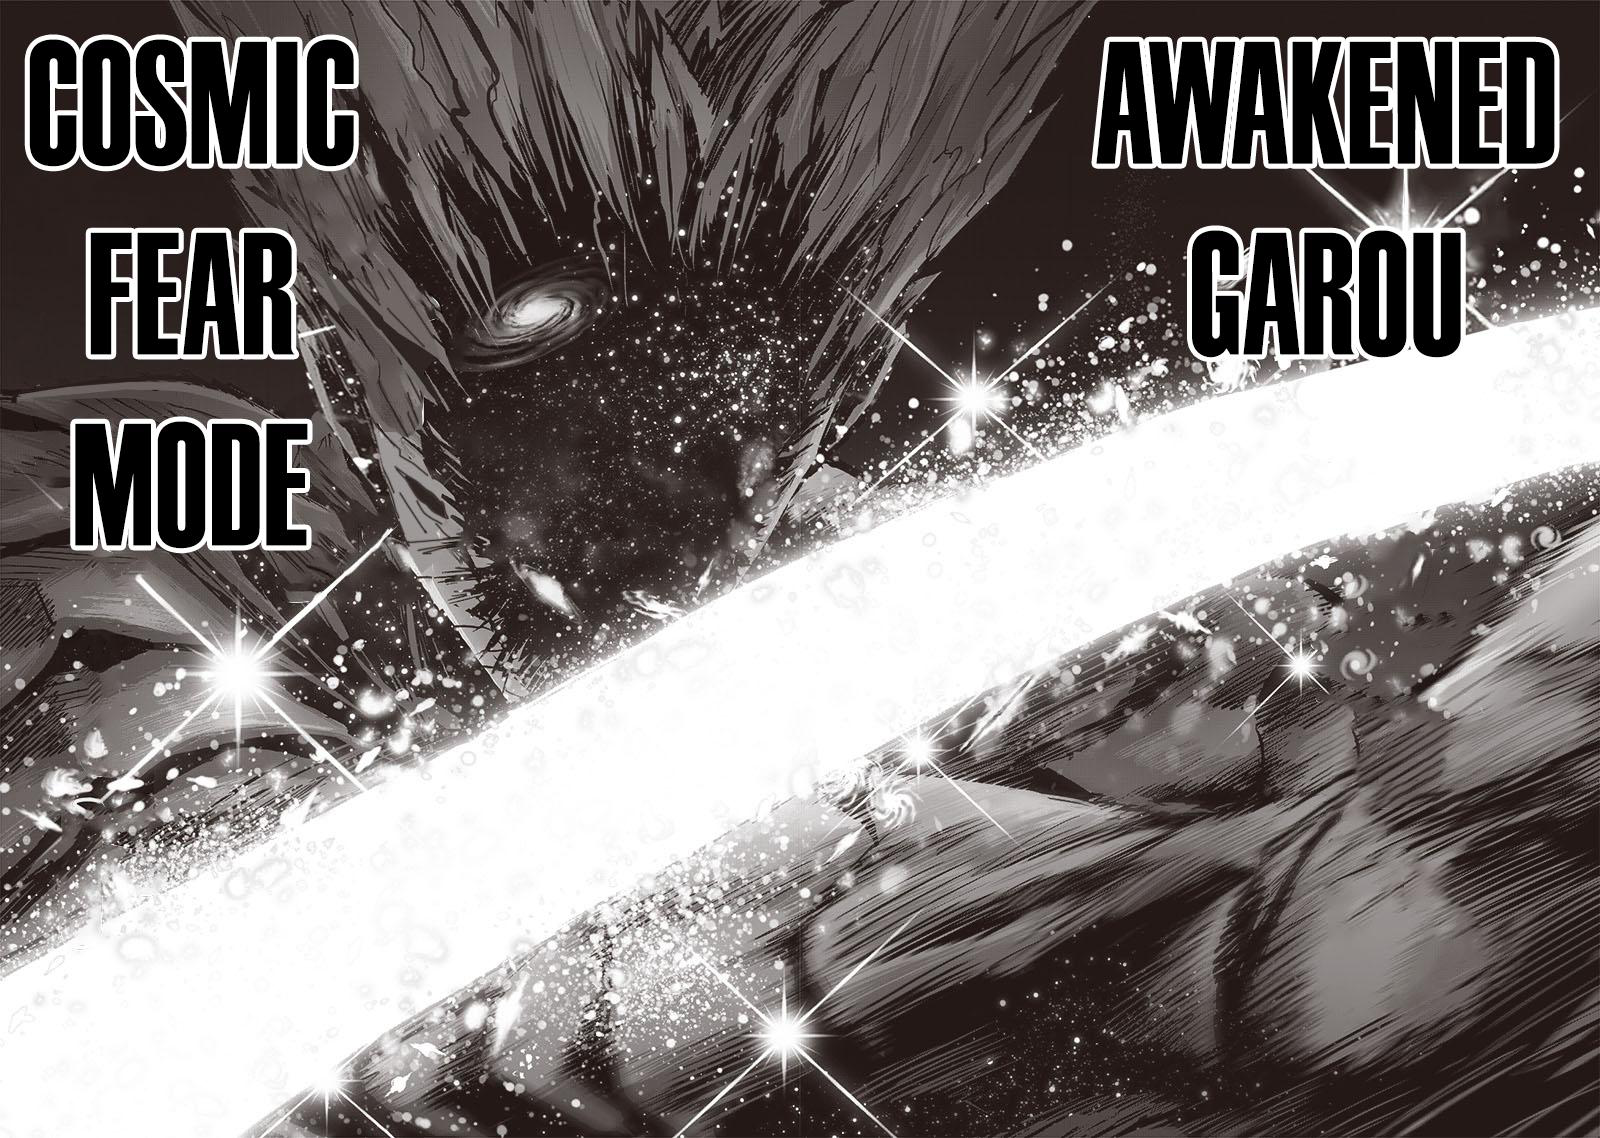 My reason why I think Awakened Garou Cosmic Fear mode is Stronger